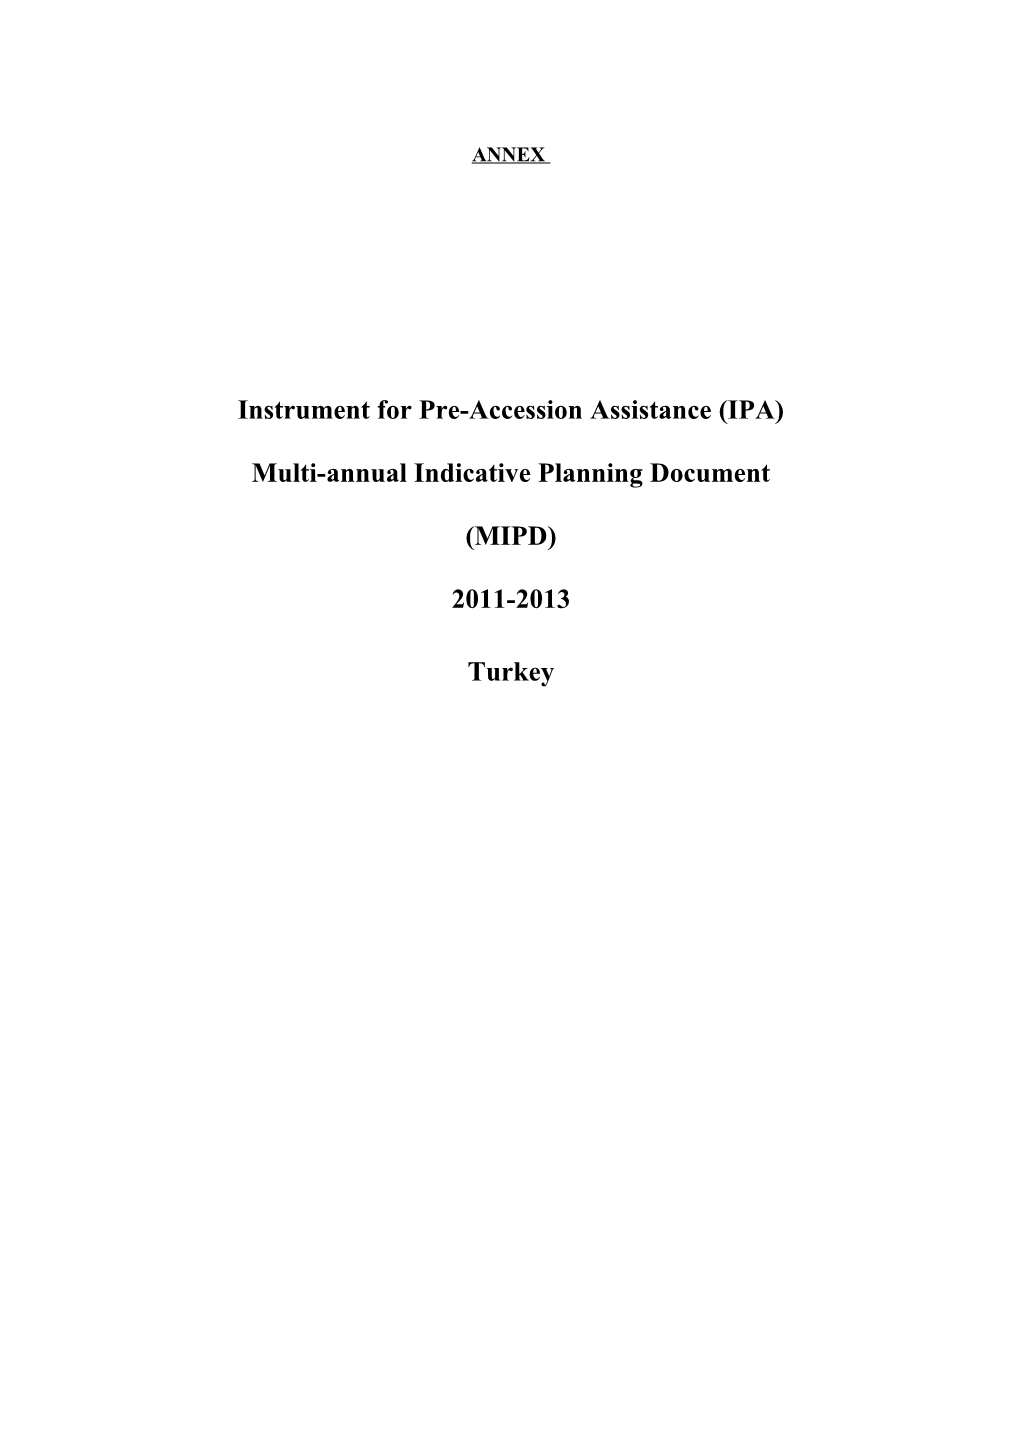 2. Strategic Planning of IPA Assistance 4